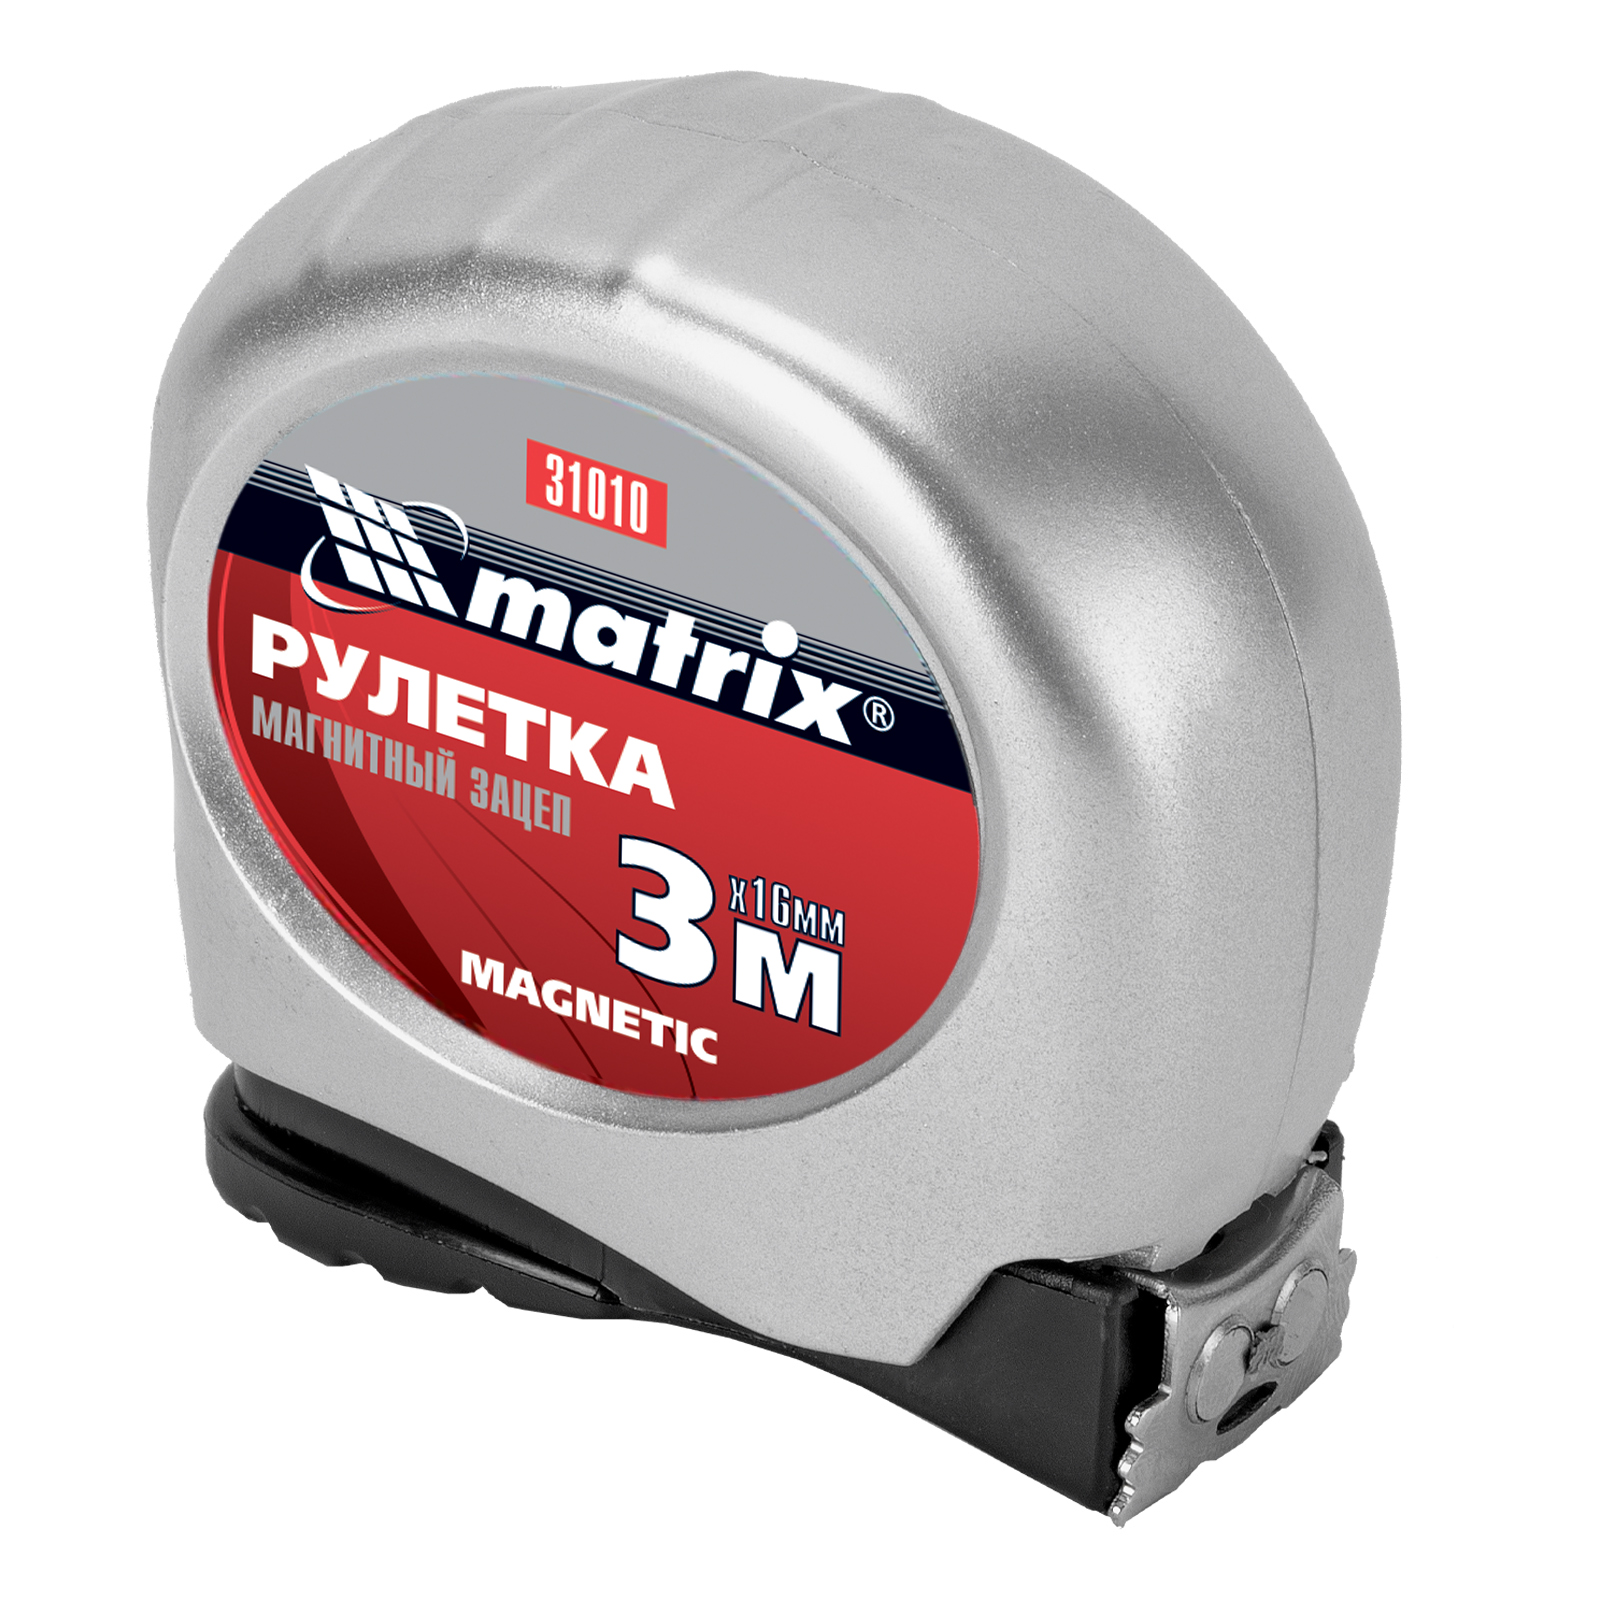 Рулетка MATRIX Magnetic 3мх16мм 31010 рулетка matrix status magnet fixation 3мх16мм 31019